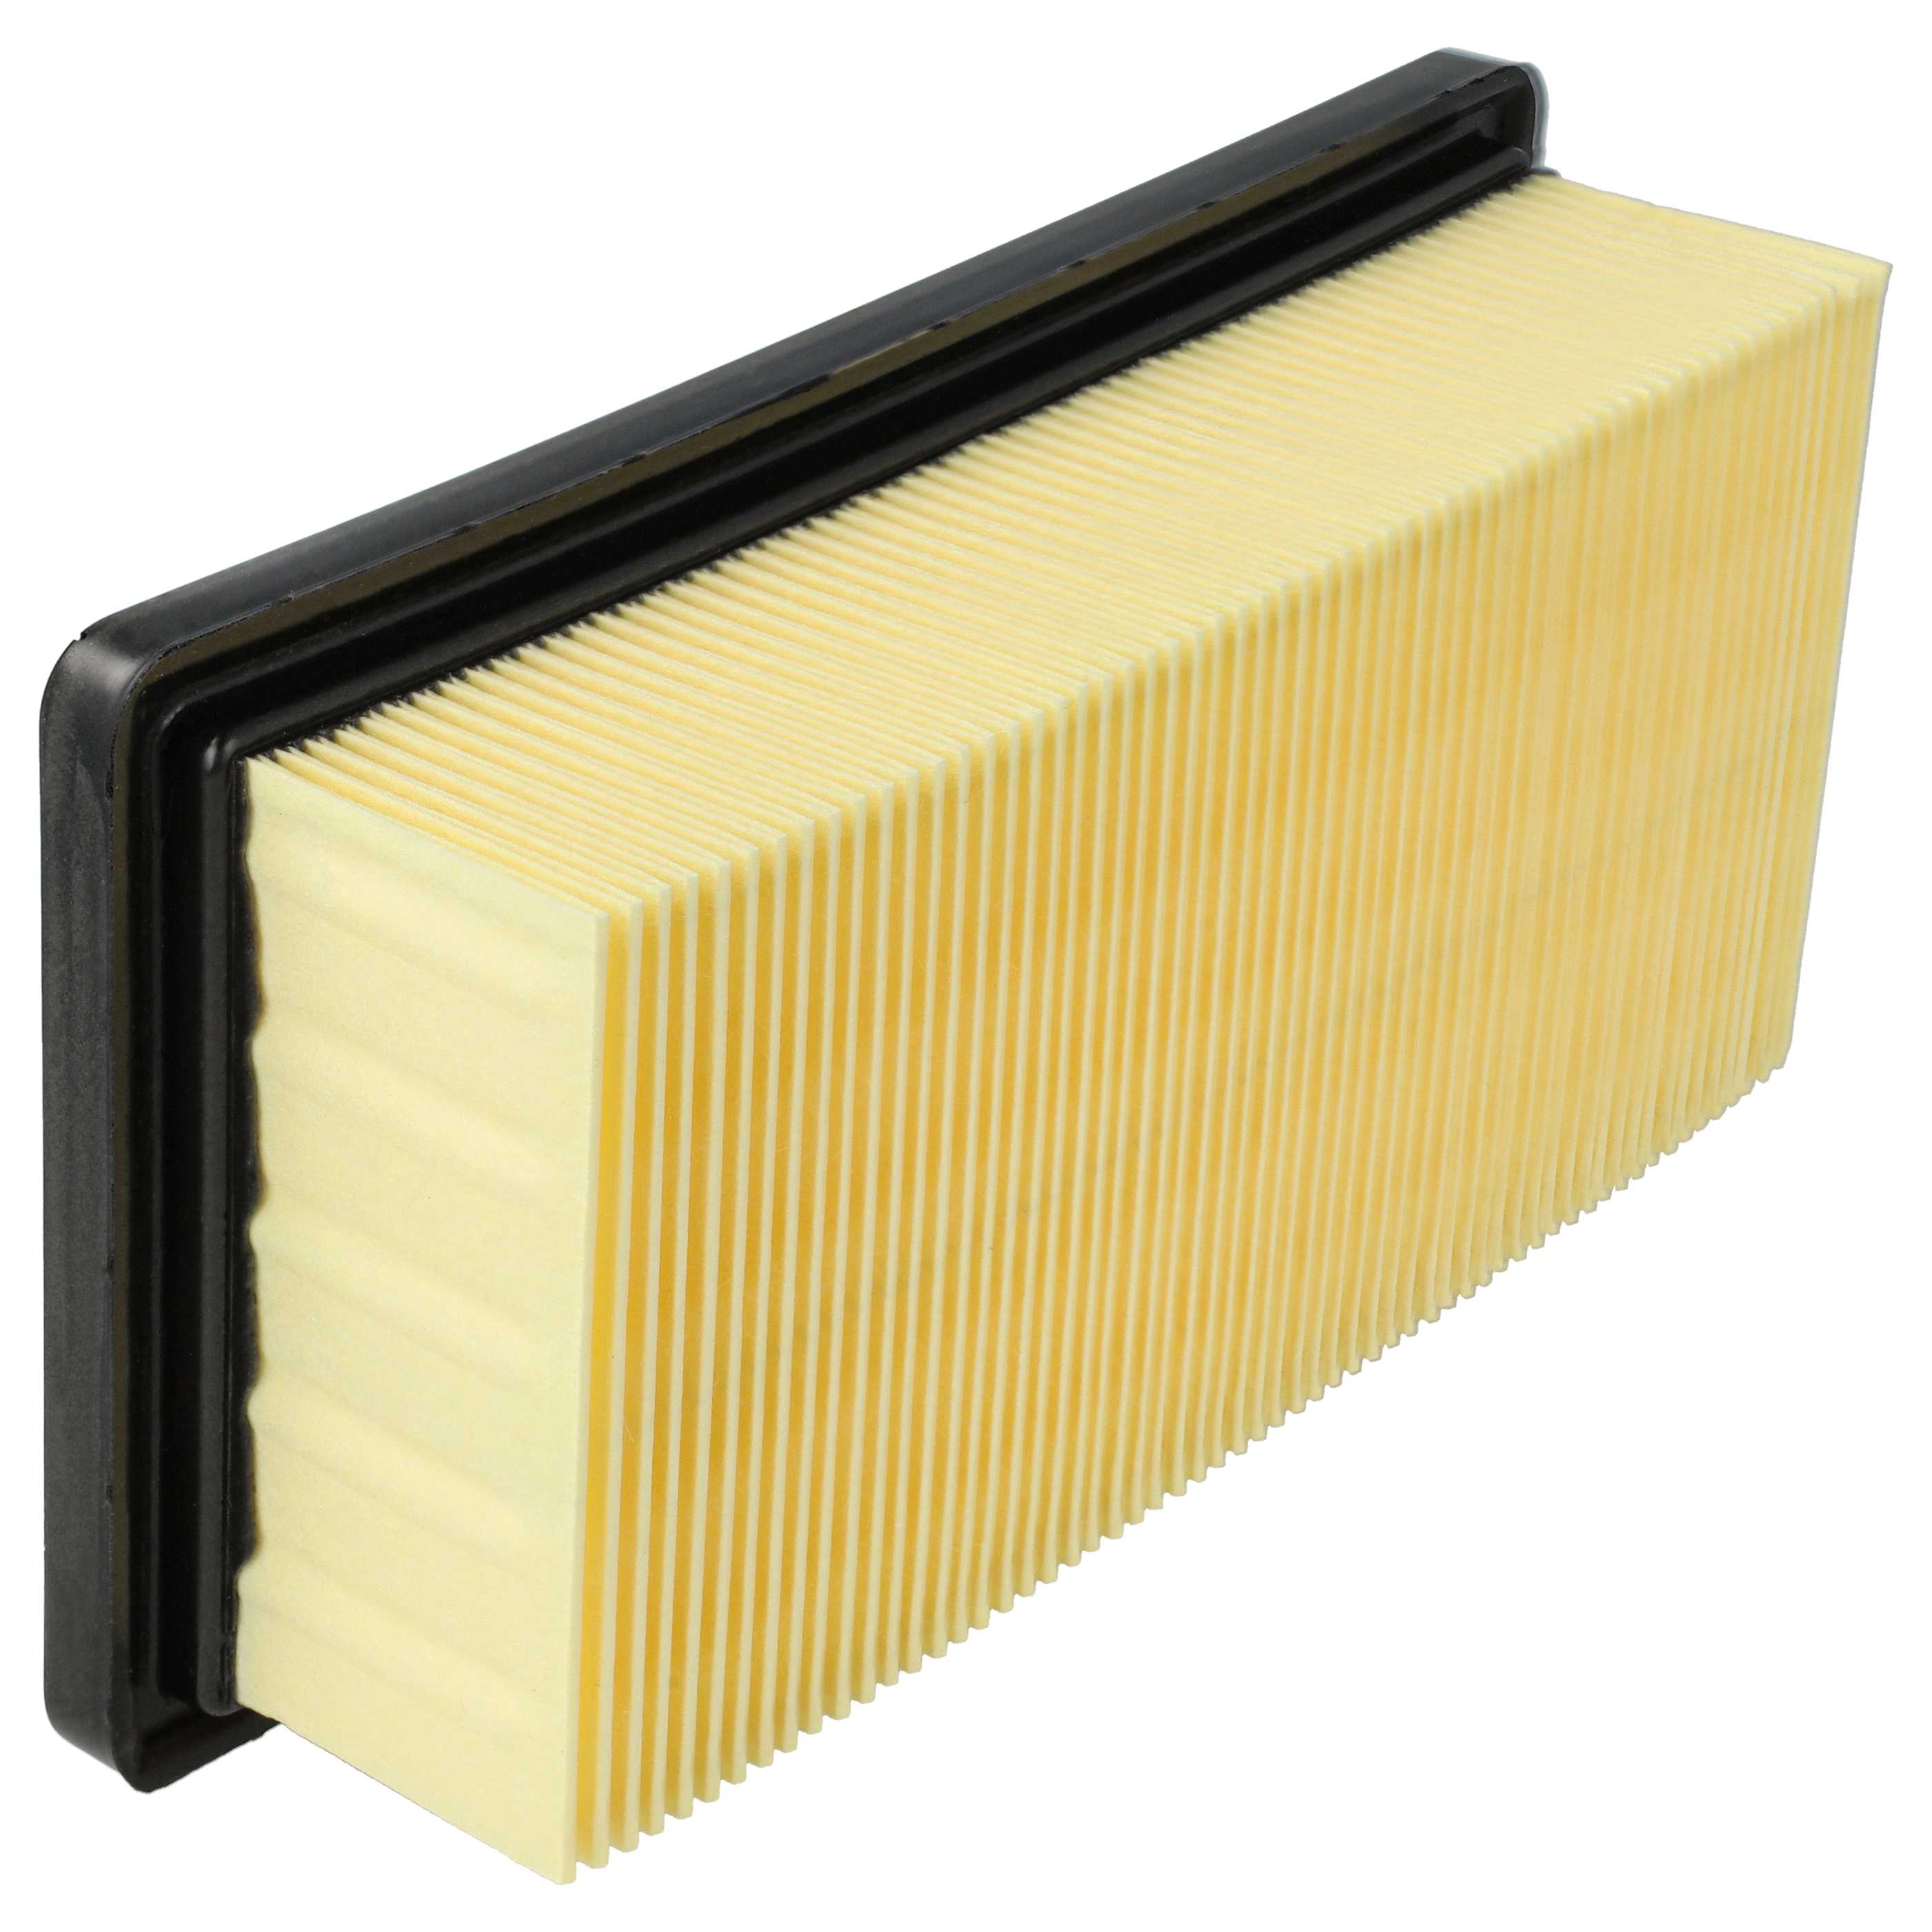 3x Filtro reemplaza Kärcher 6.414-971.0 para aspiradora - filtro plisado plano